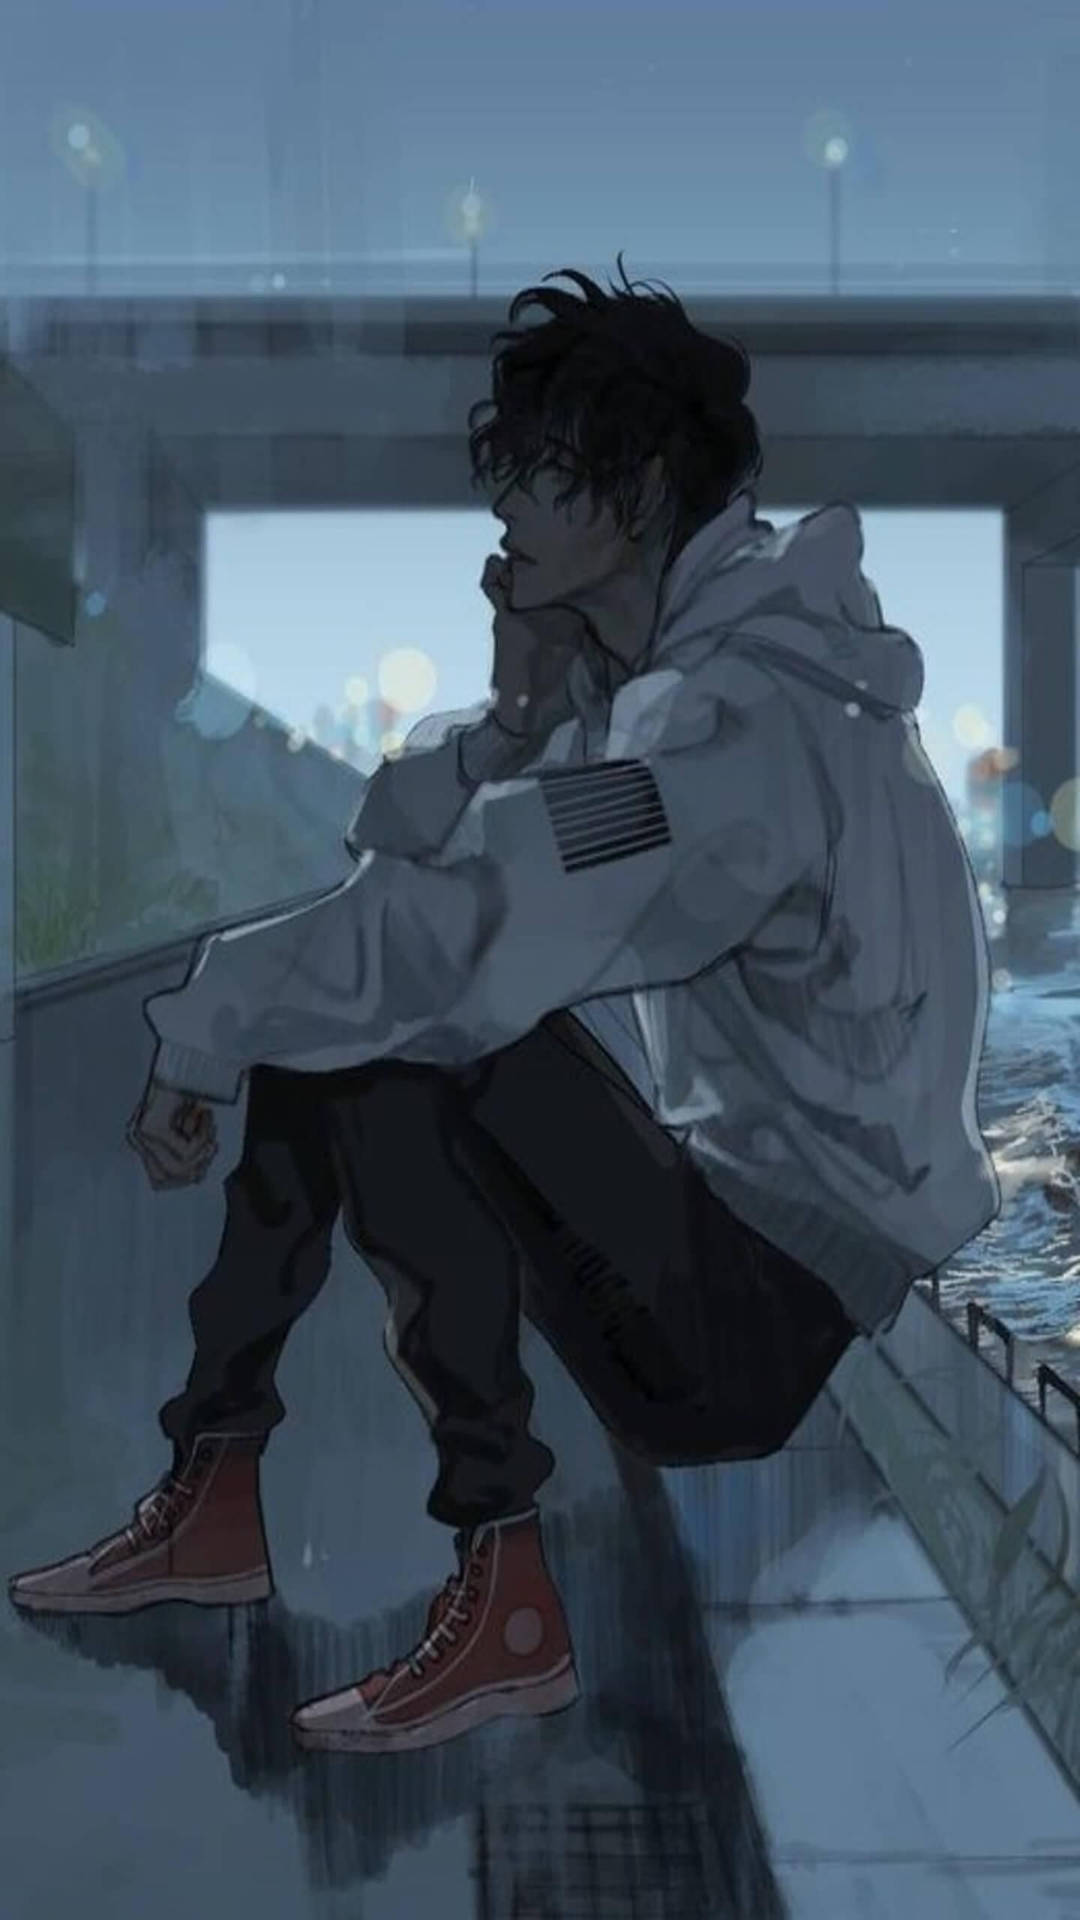 Sad Anime Boy White Jacket Wallpaper